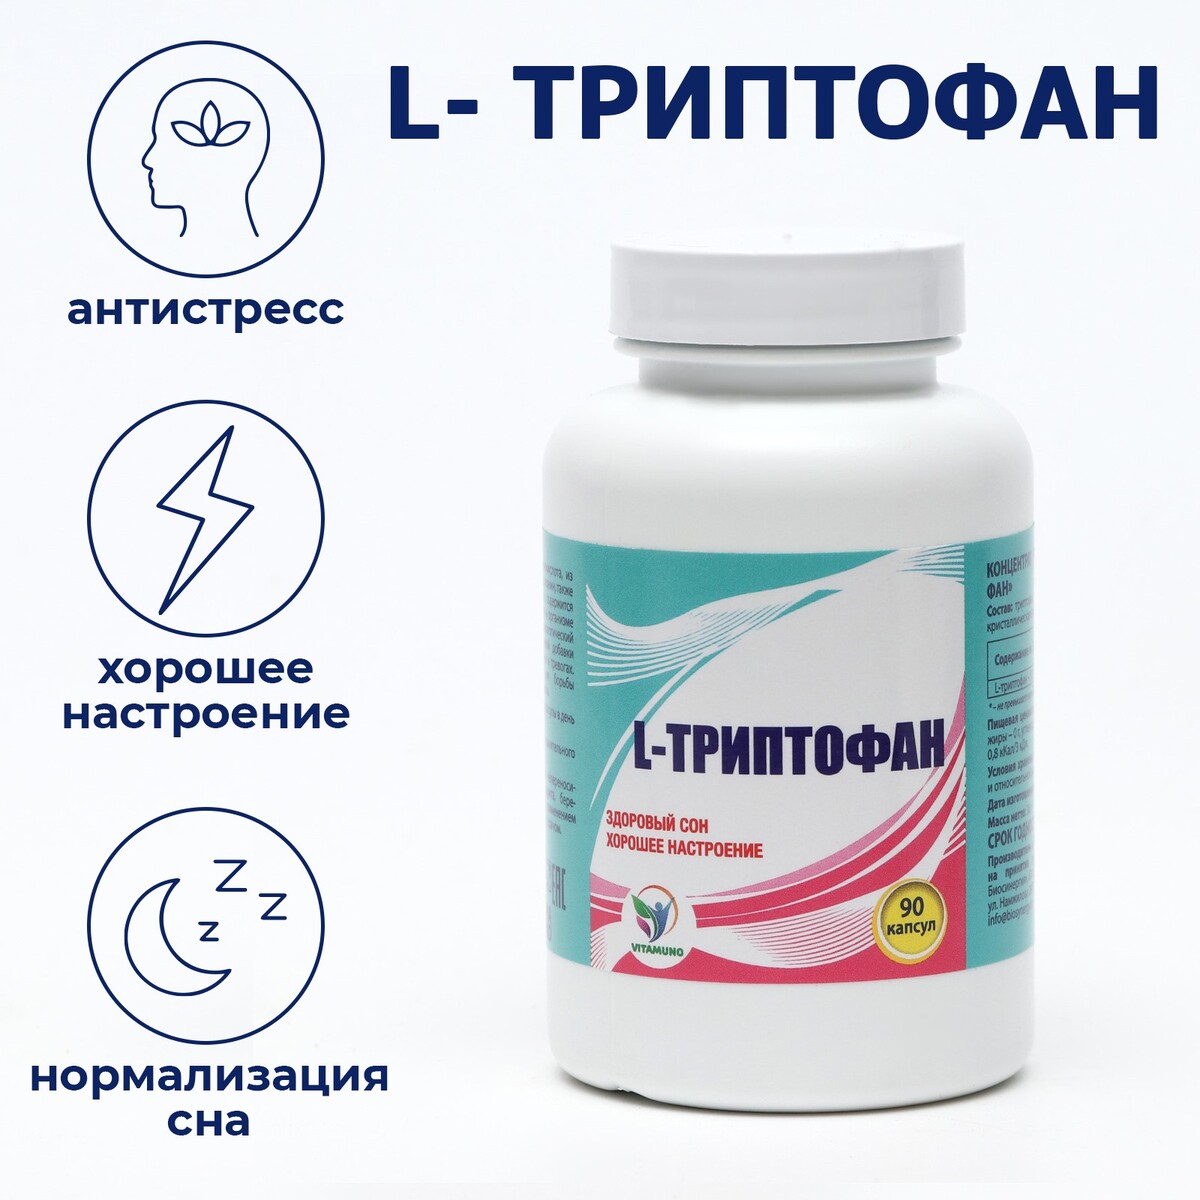 L-триптофан vitamuno здоровый сон,90капсул Vitamuno